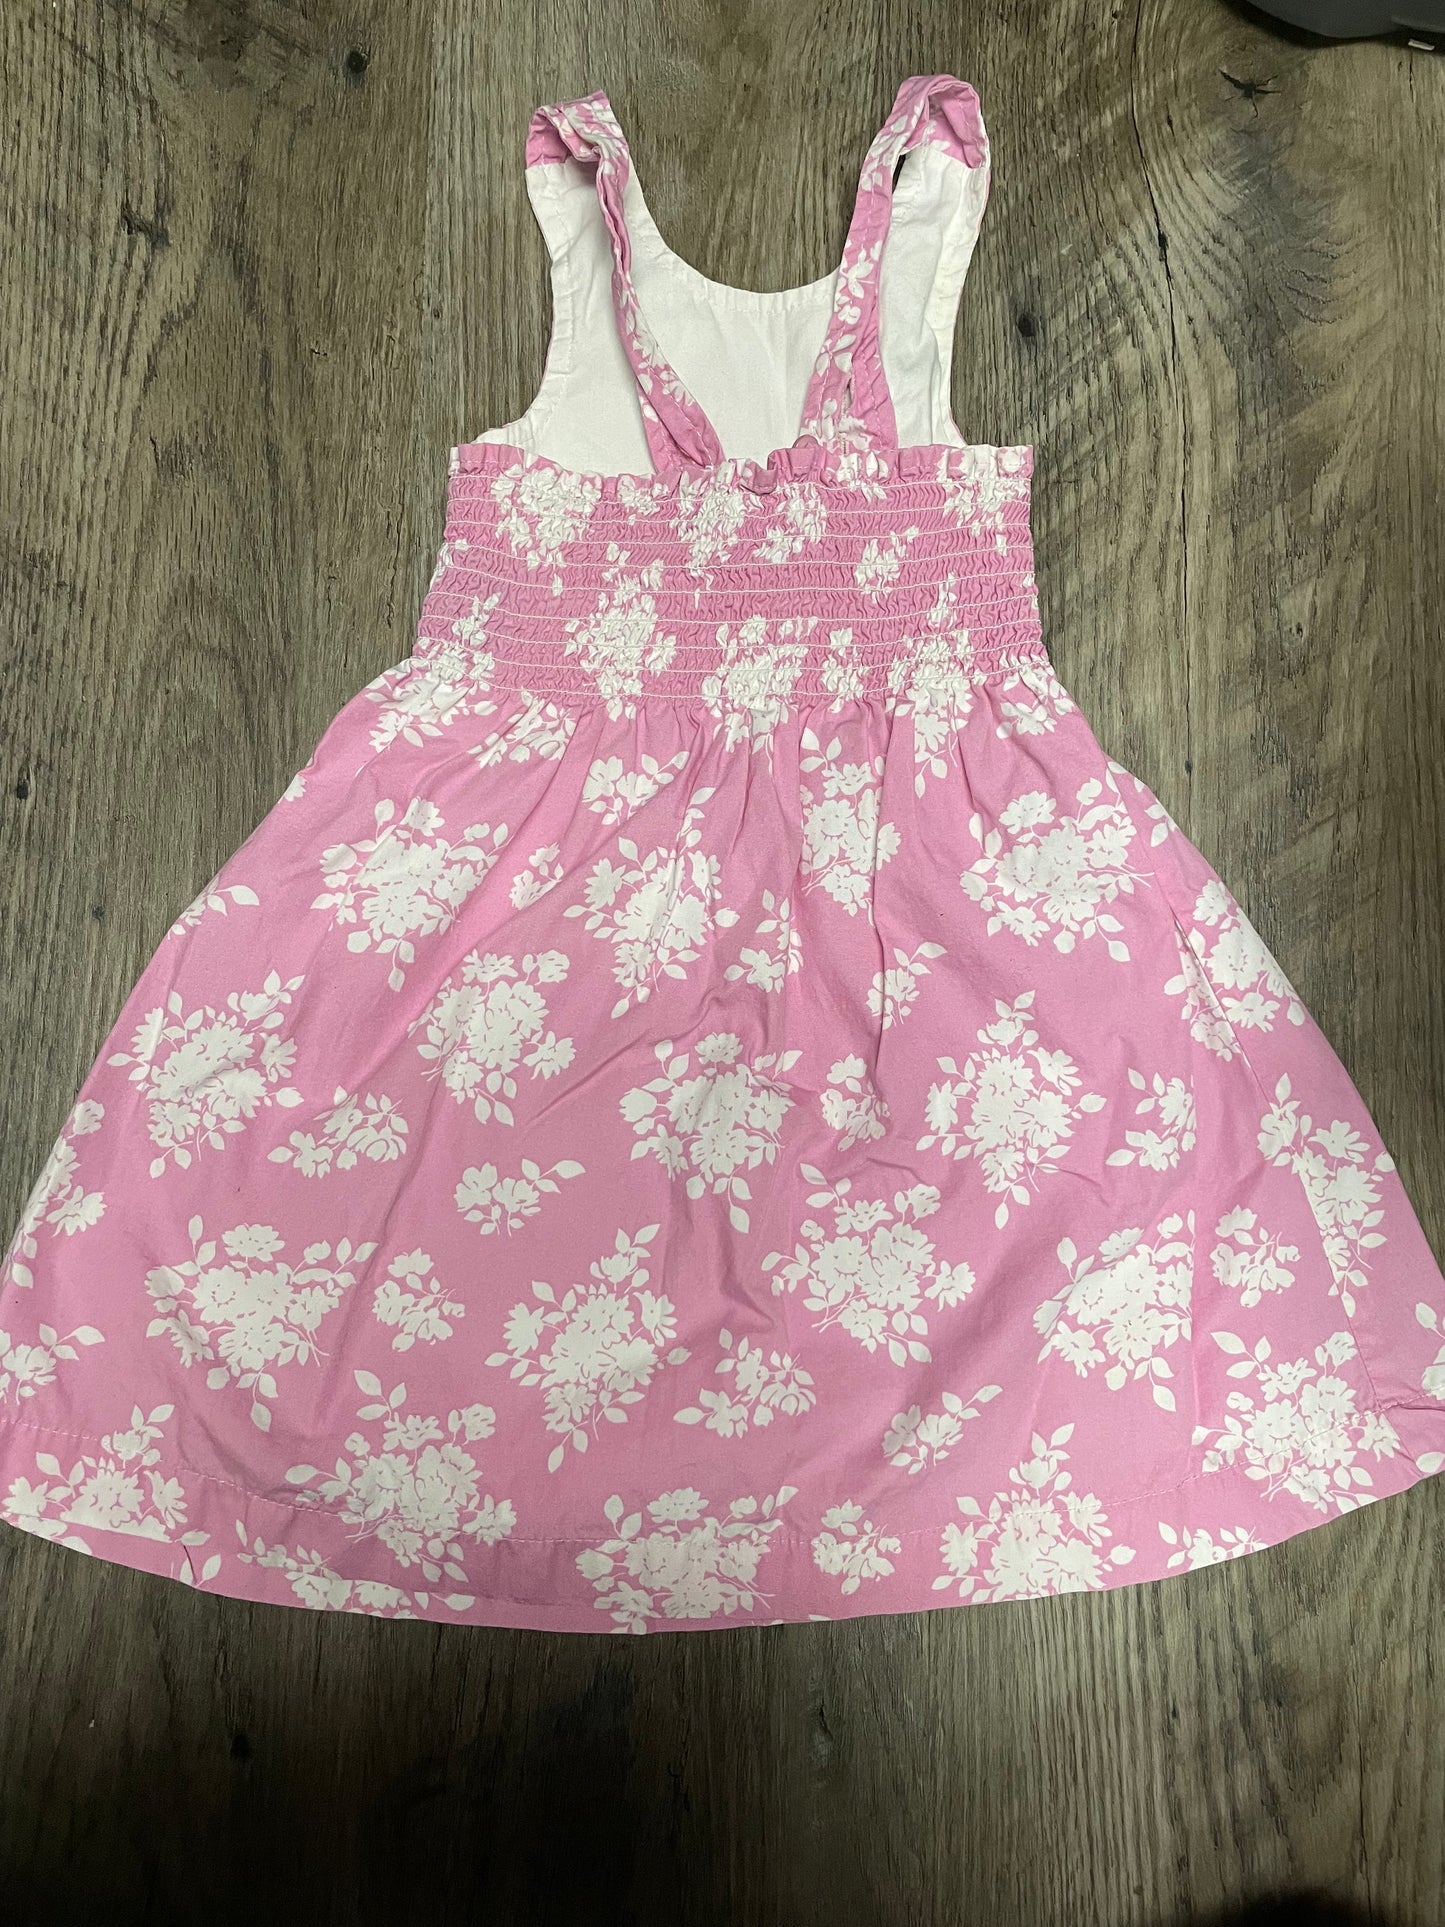 GUC baby girl 12-18 month mini boden dress